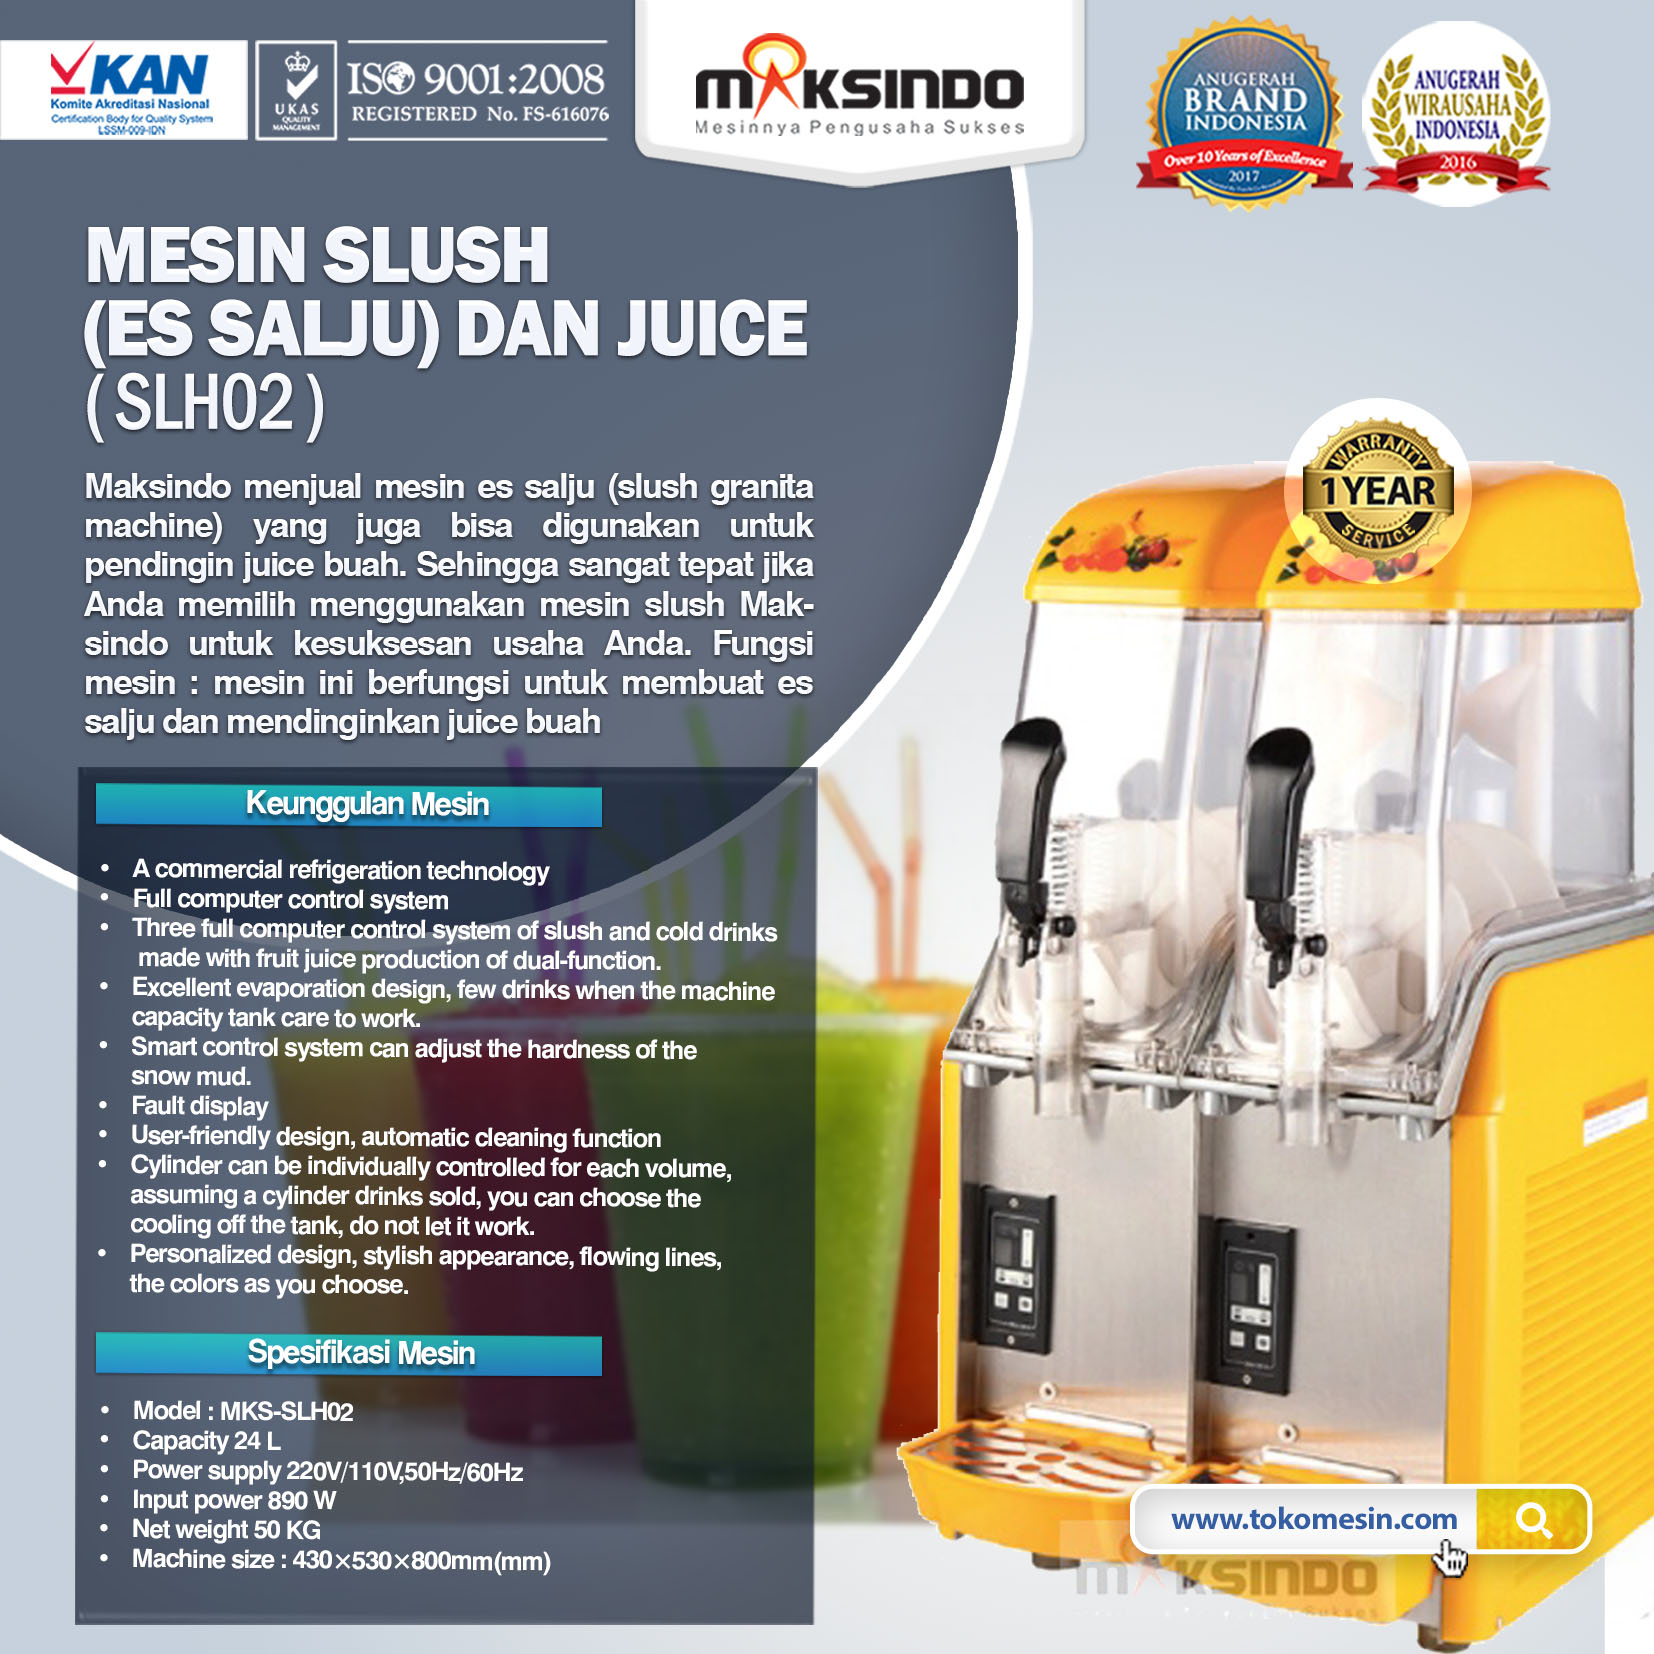 Mesin Slush (Es Salju) dan Juice – SLH02